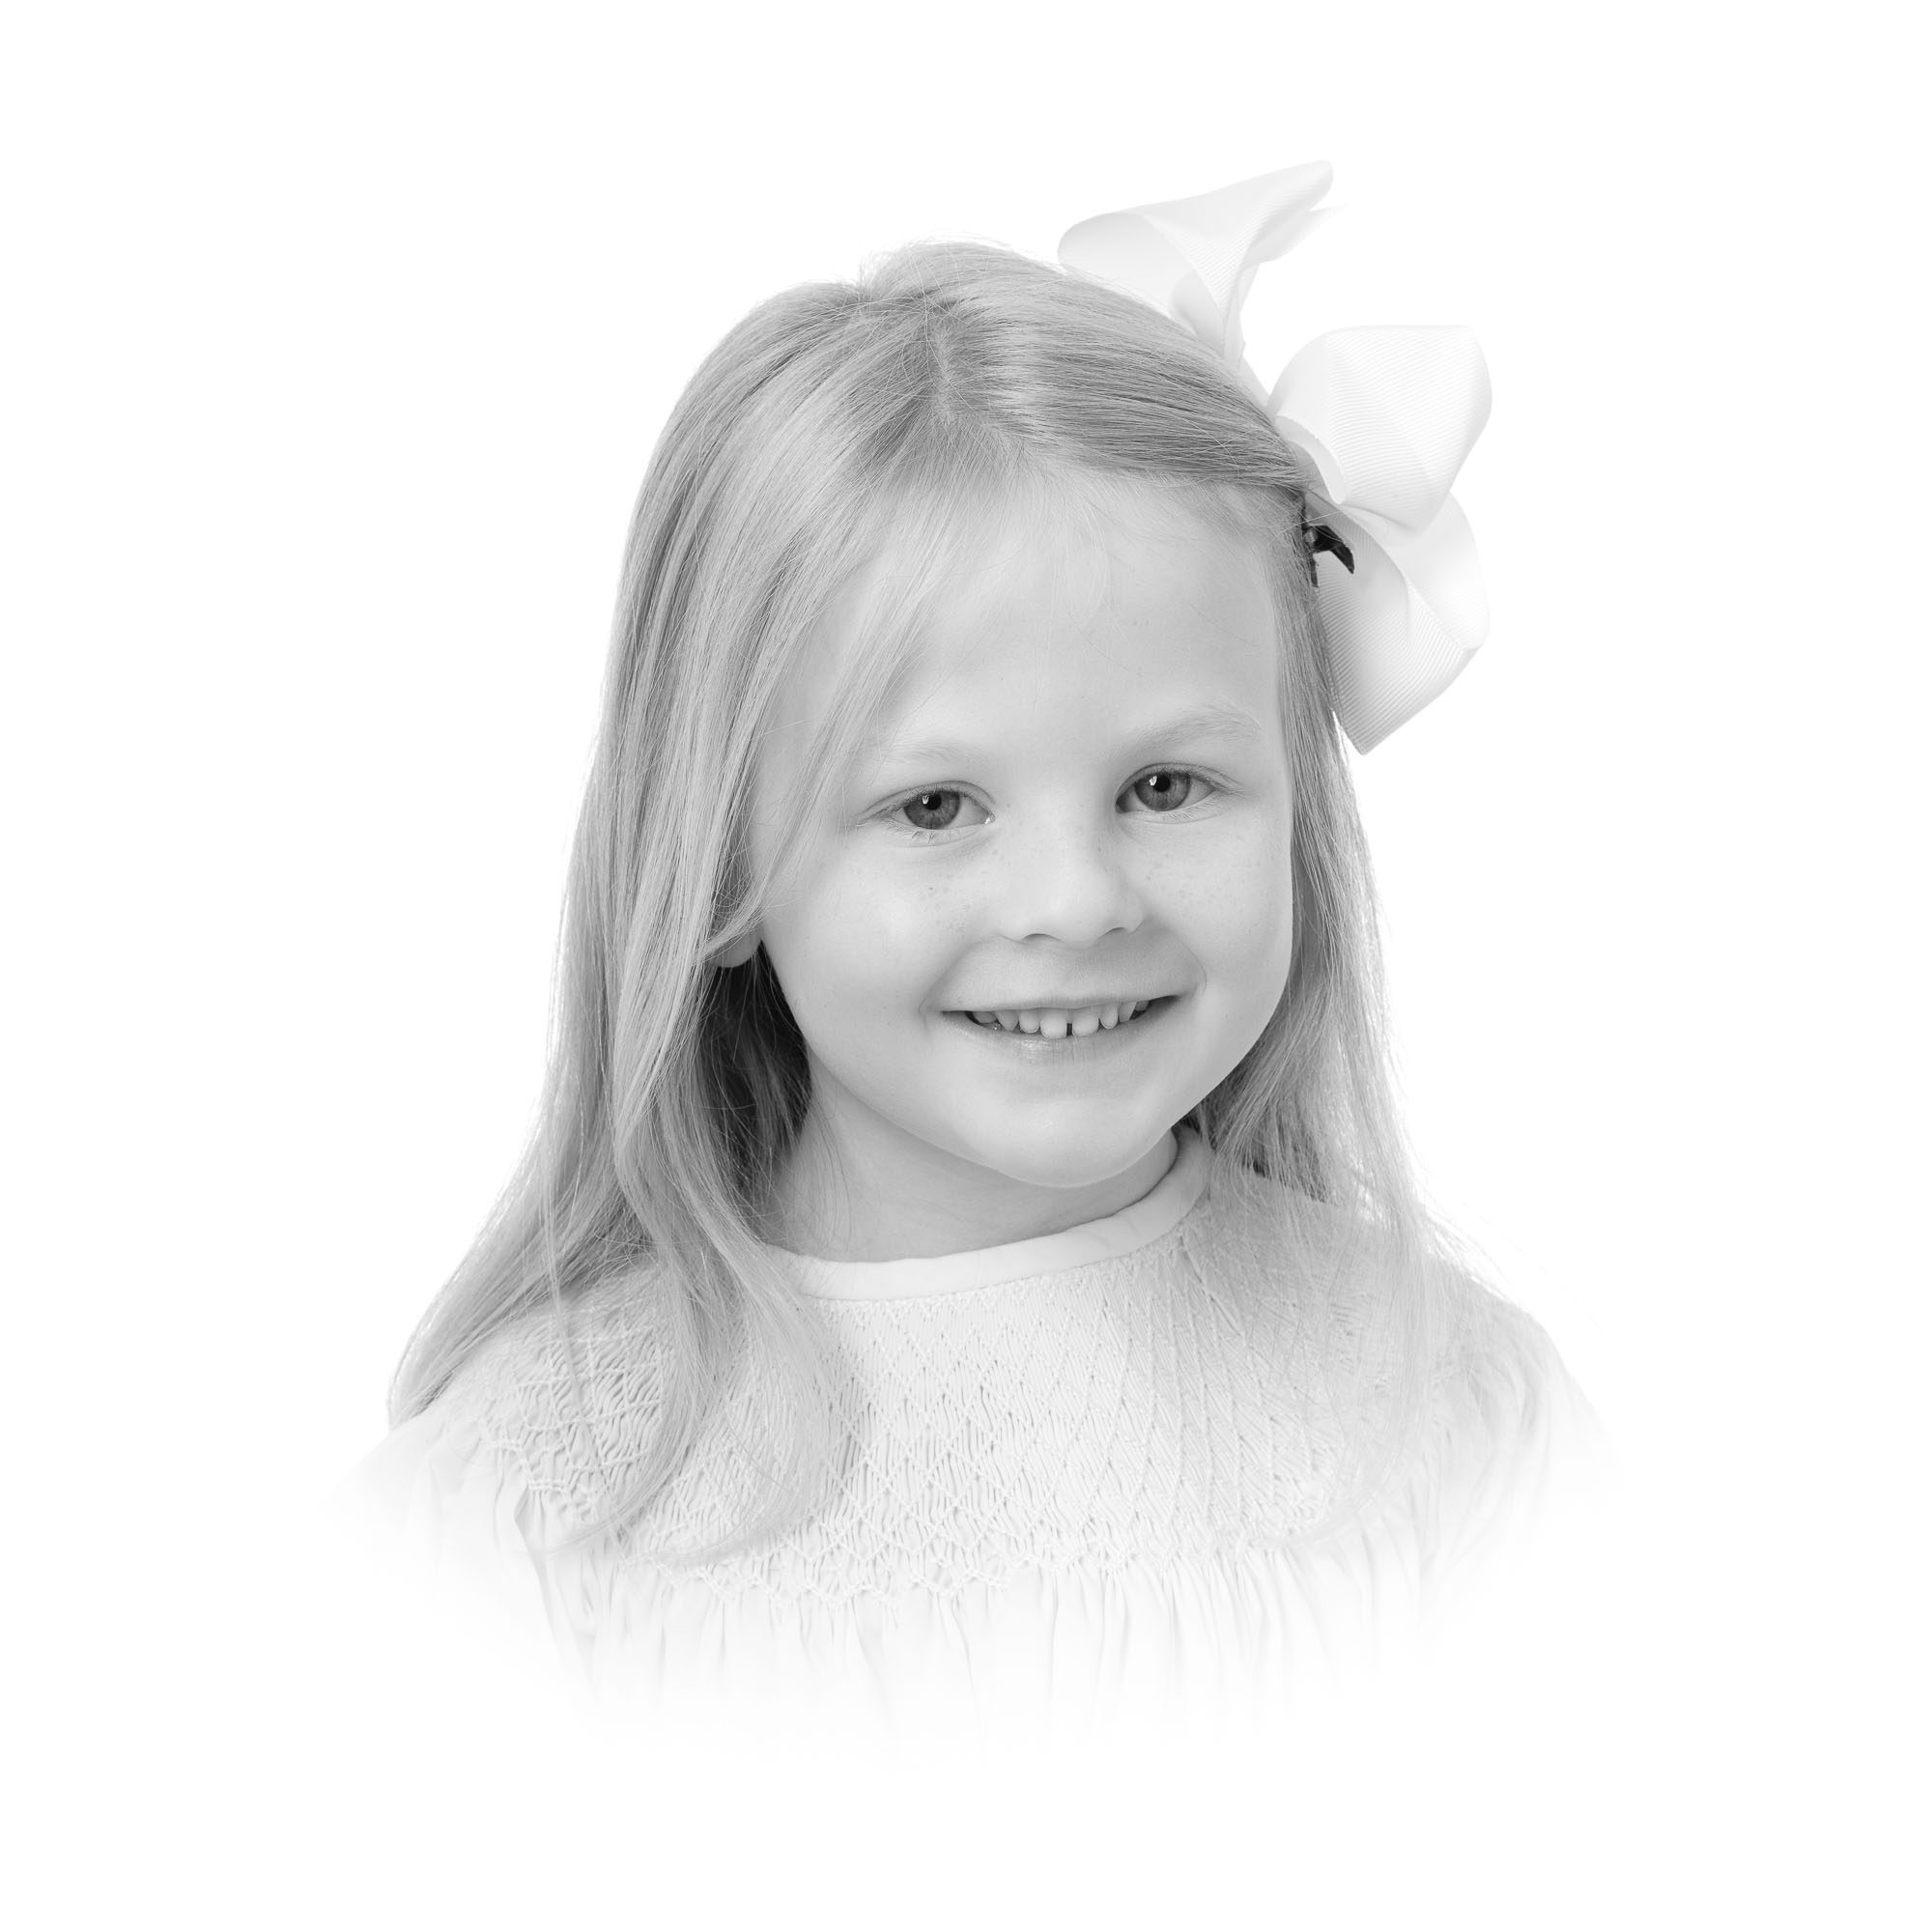 Timeless portrait of a little girl